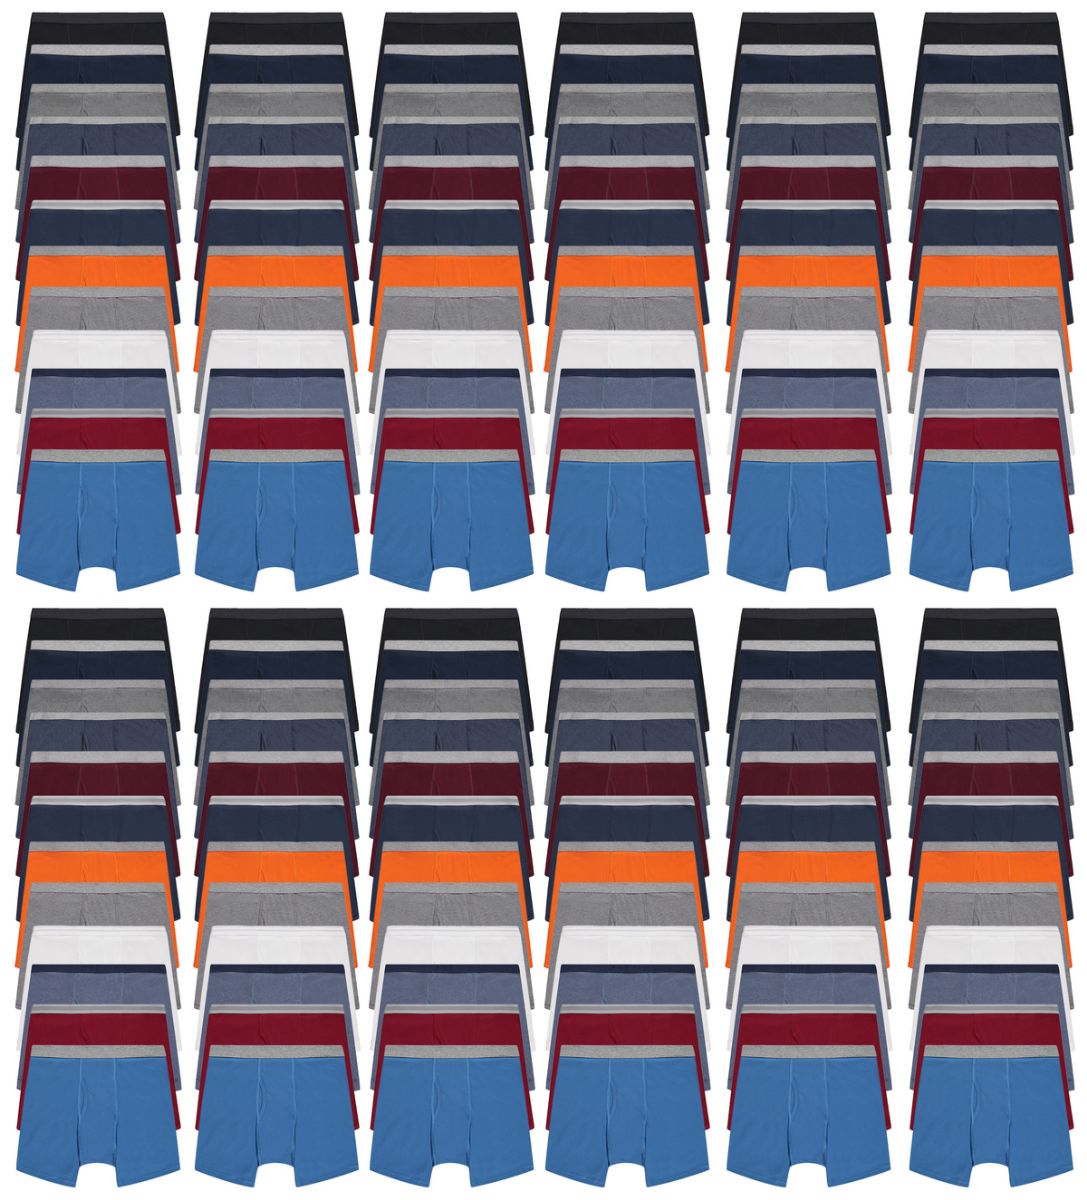 144 Pieces of Mens 100% Cotton Boxer Briefs Underwear Assorted Colors, Size X-Large, 144 Pack